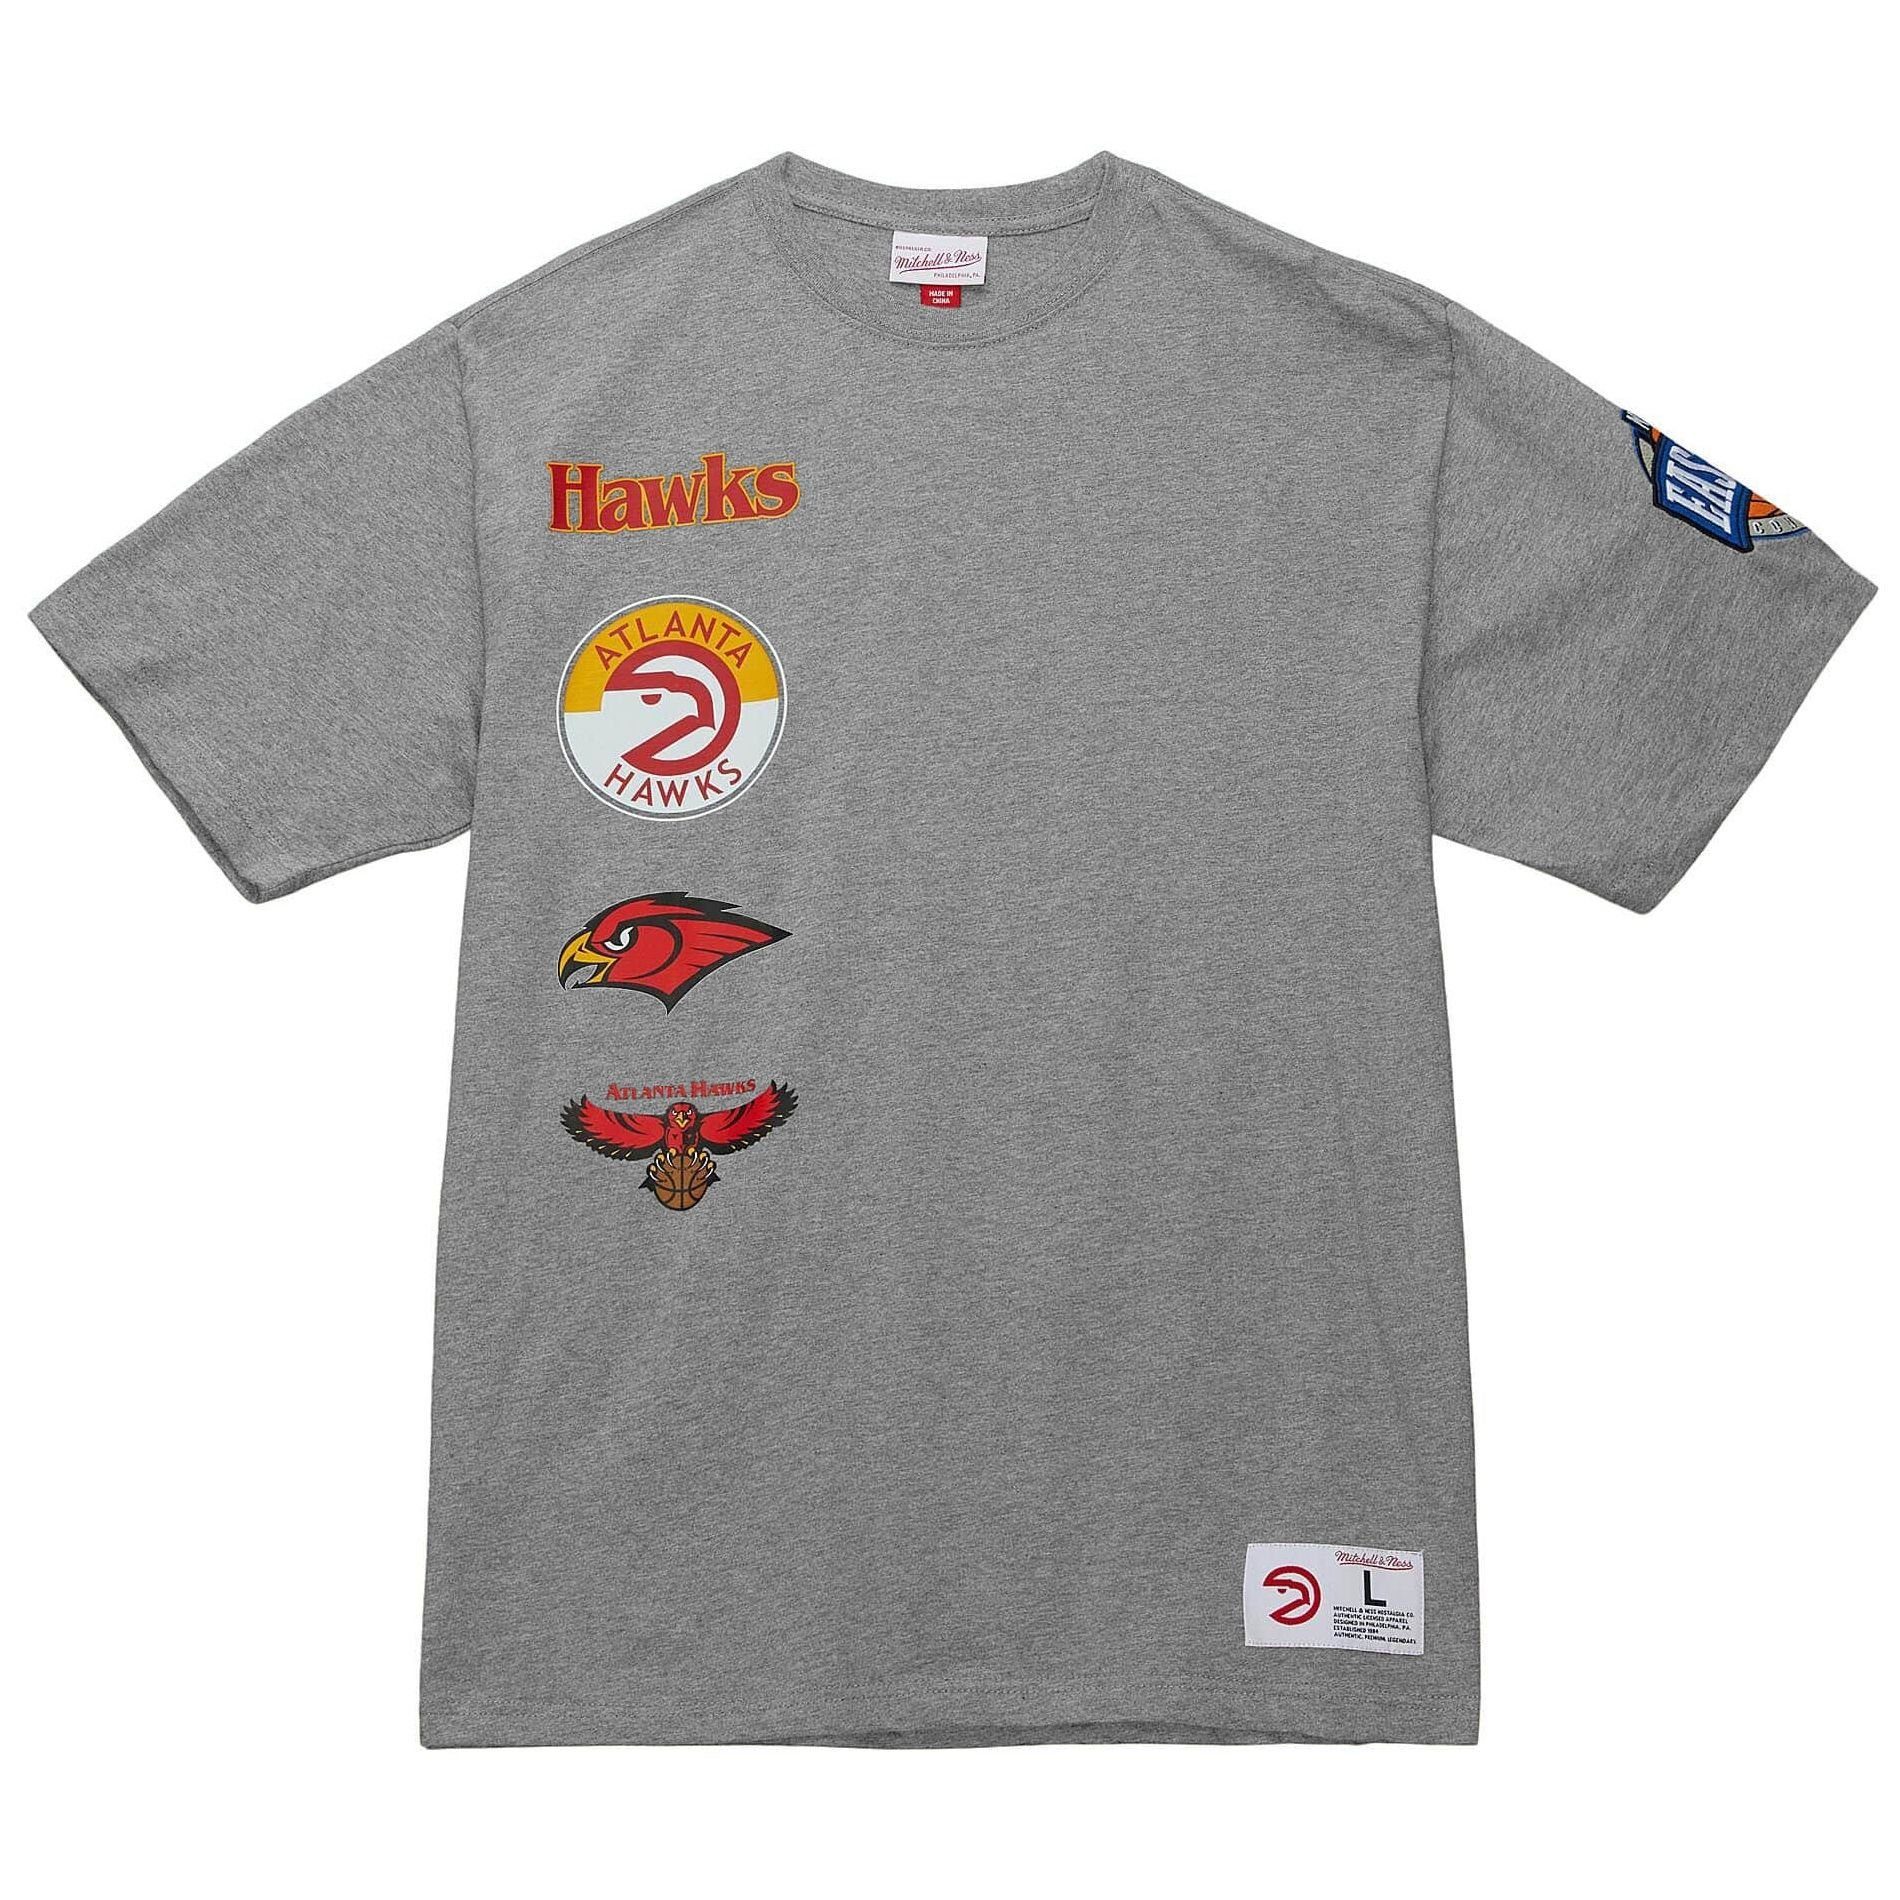 Mitchell & Ness Print-Shirt HOMETOWN CITY Atlanta Hawks